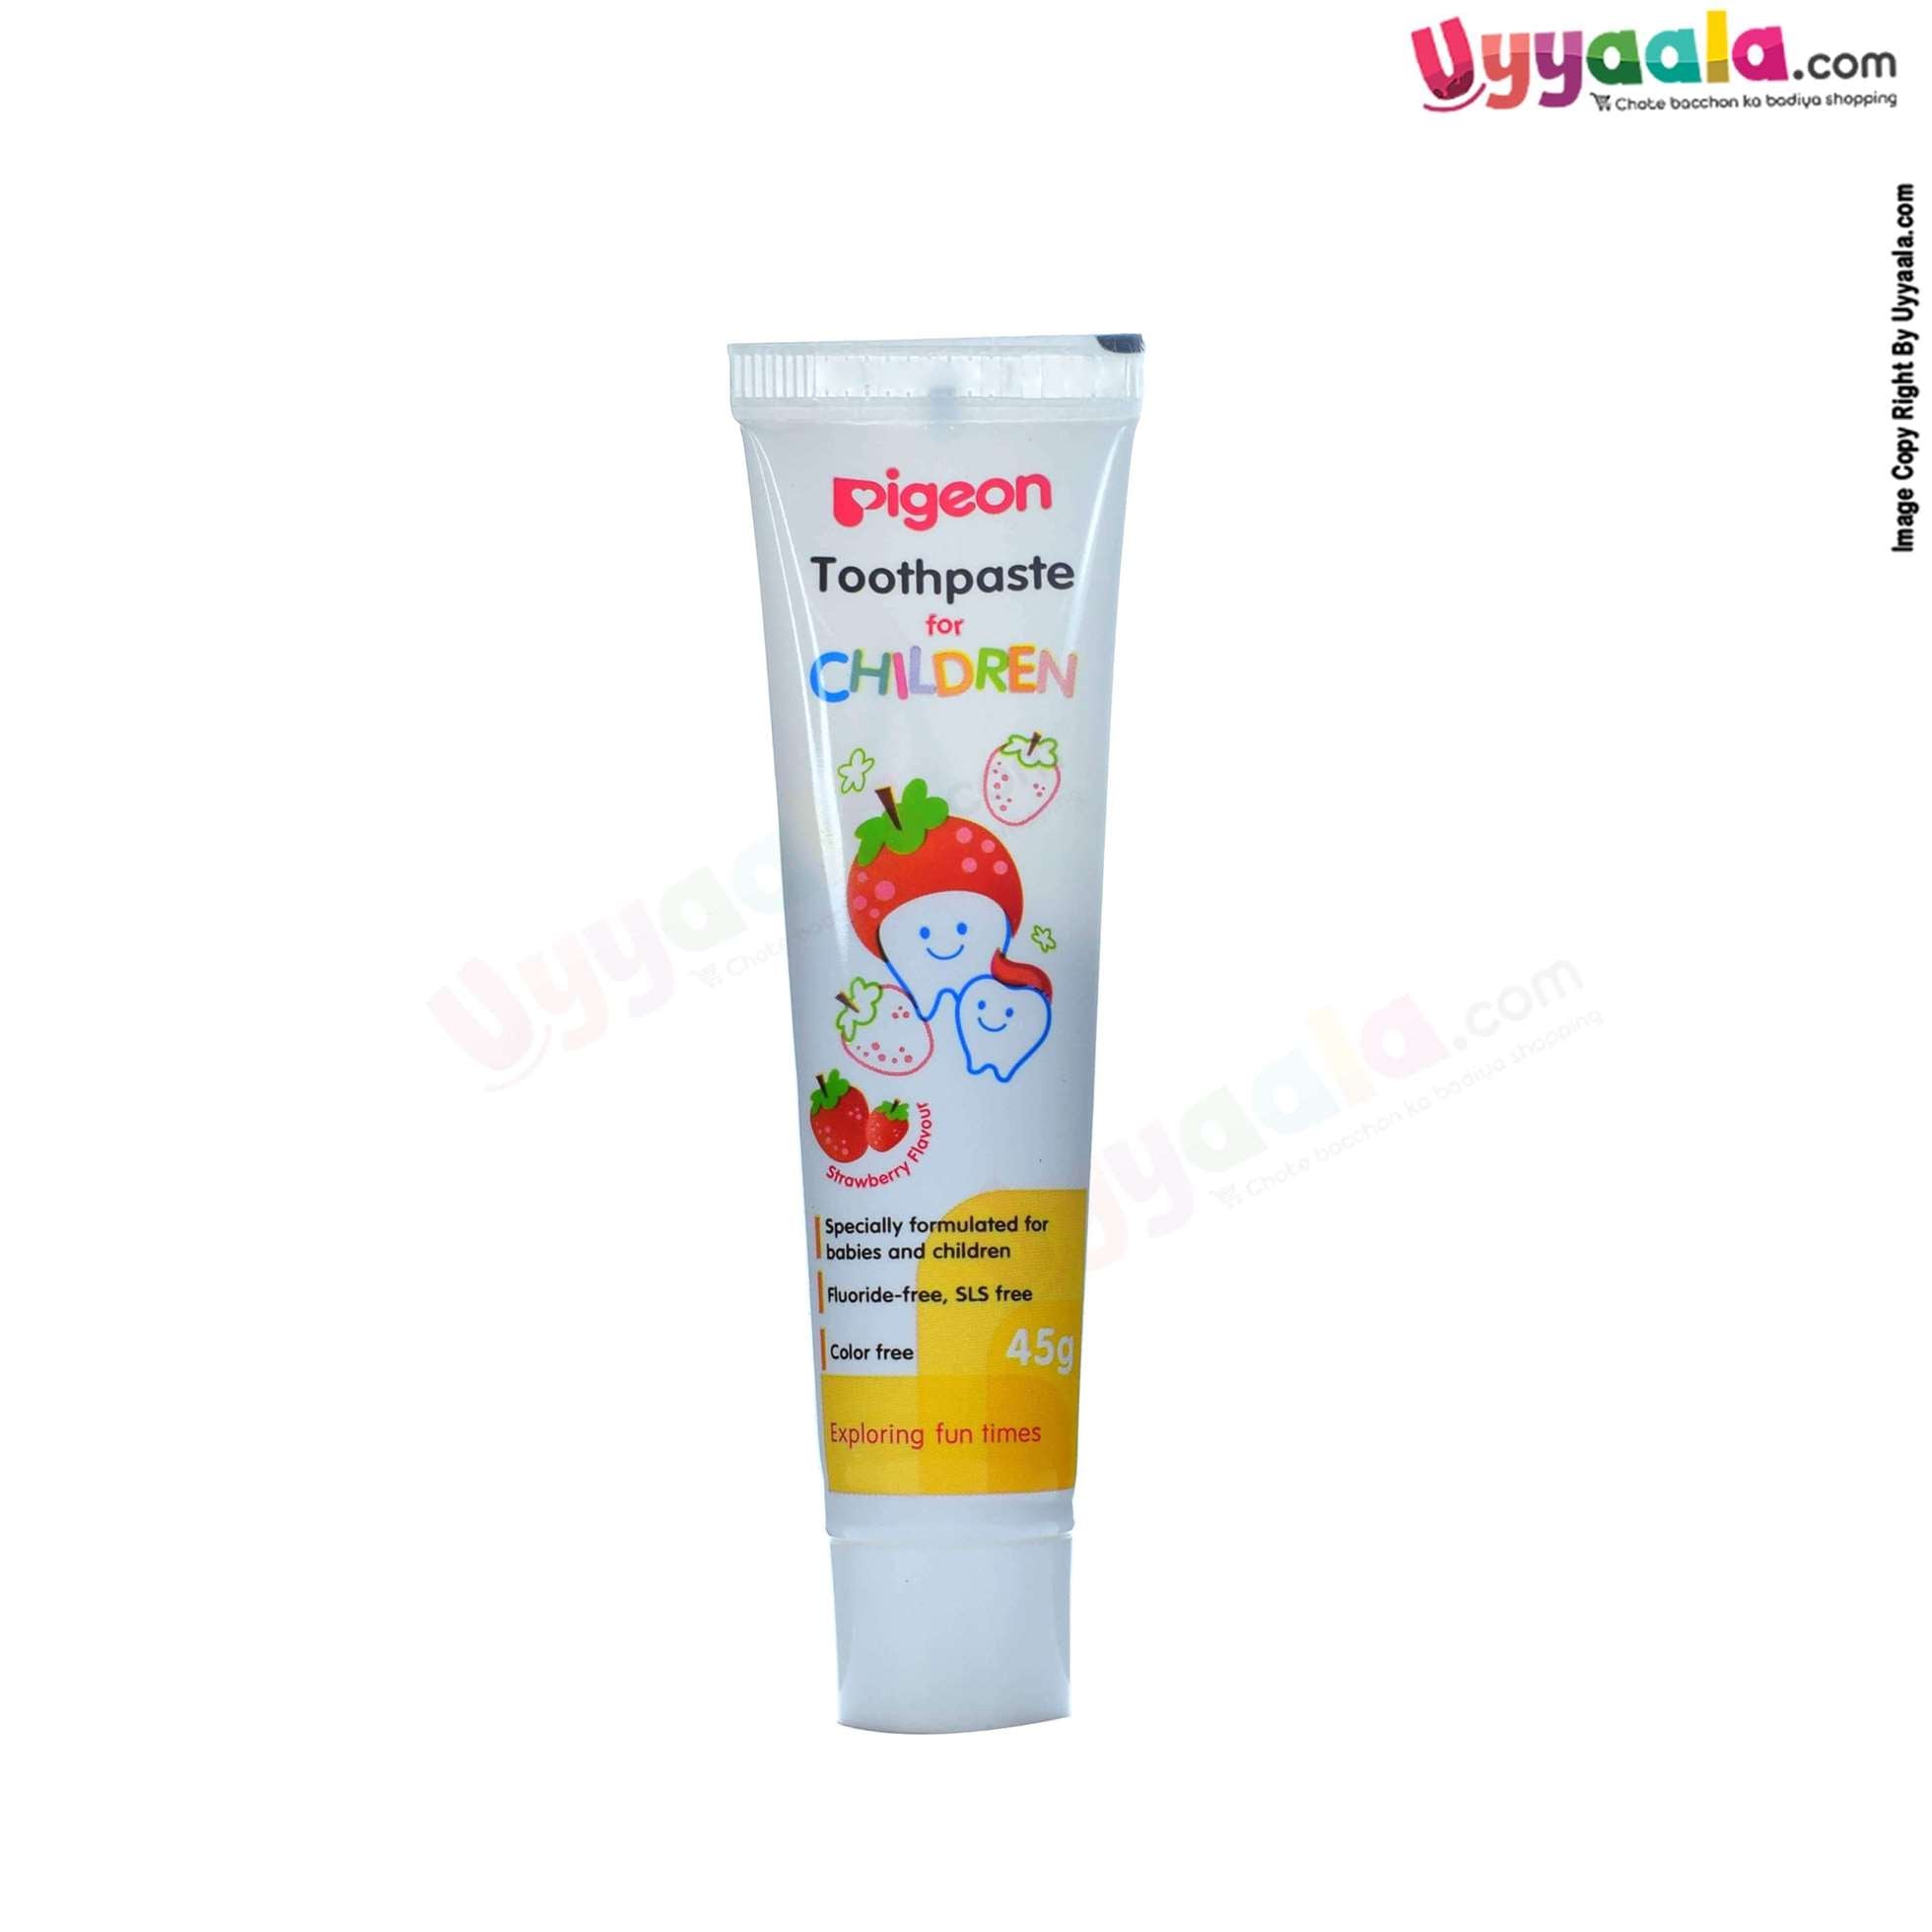 PIGEON Toothpaste for Children Strawberry - 45g-uyyala-com.myshopify.com-Toothpaste-Pigeon